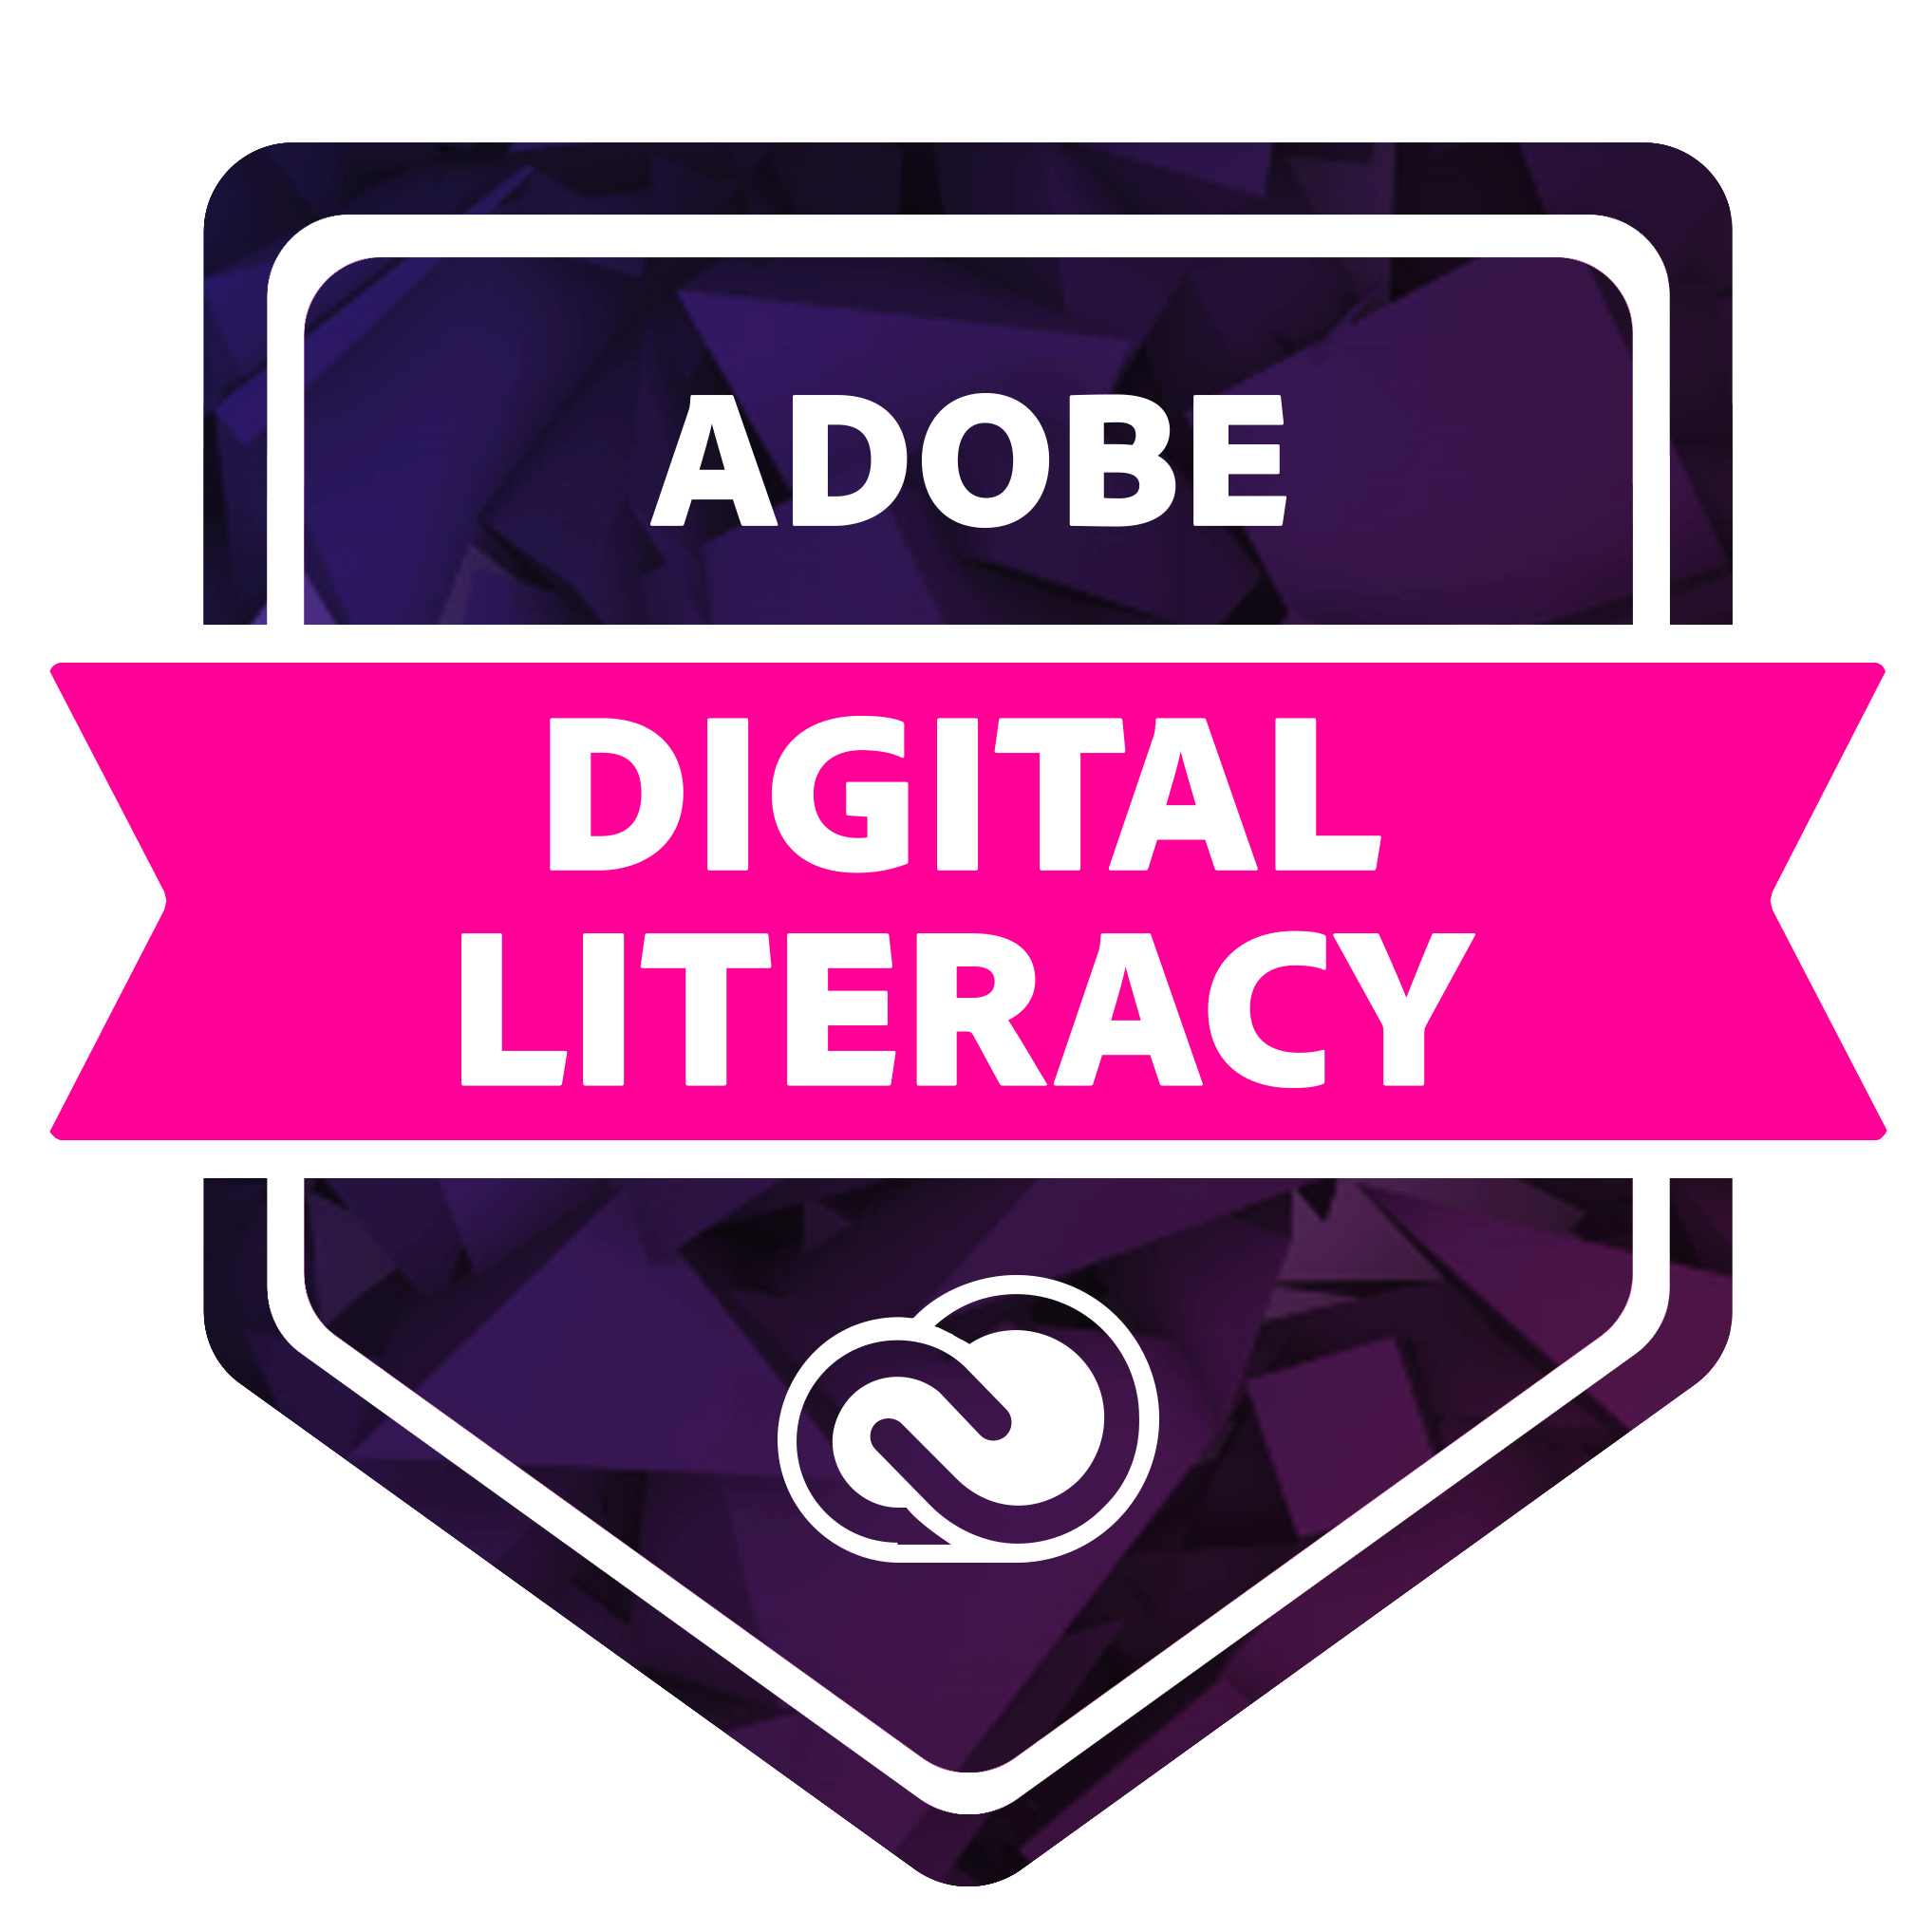 Adobe Digital Literacy badge